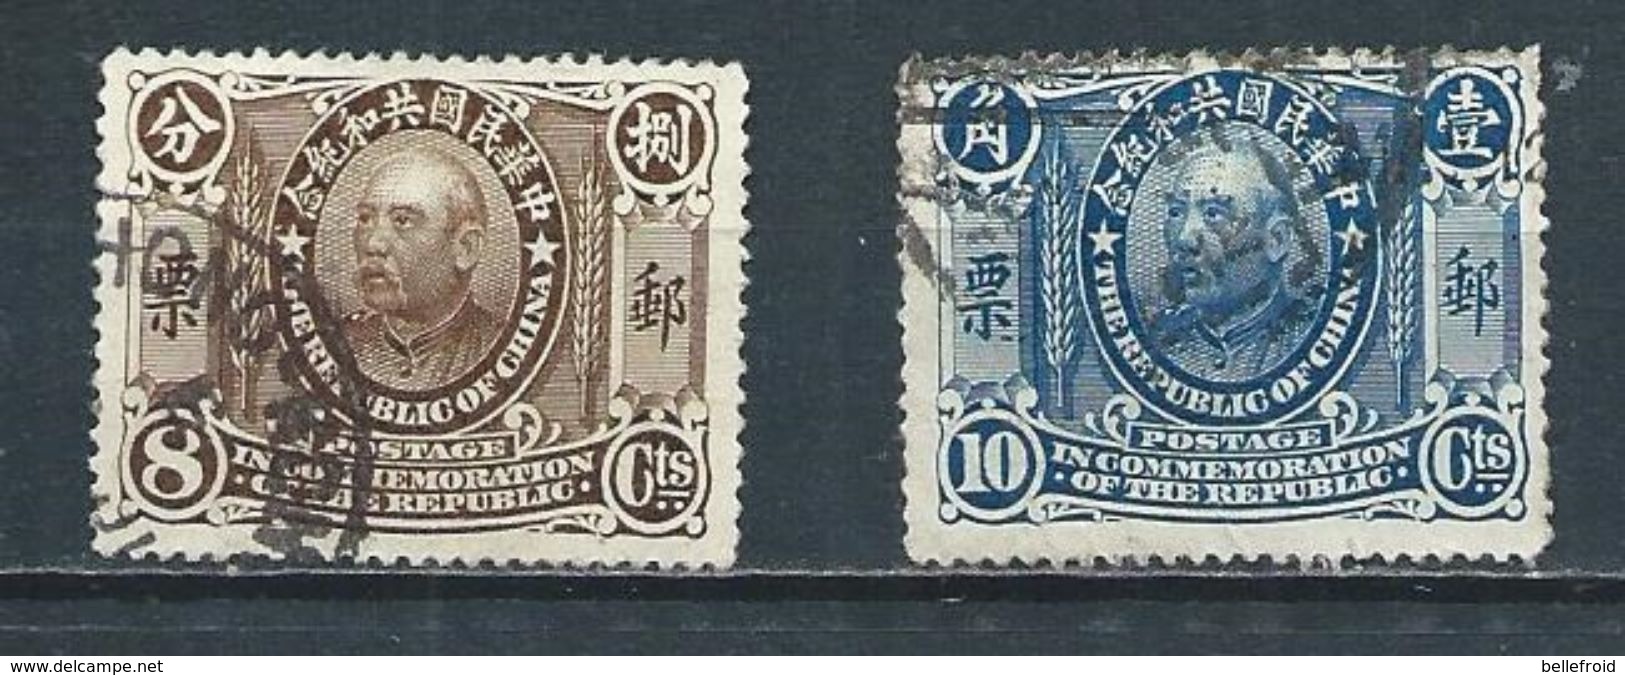 CHINA 1912 YUAN SHIHKAI 8c + 10c USED - 1912-1949 Repubblica